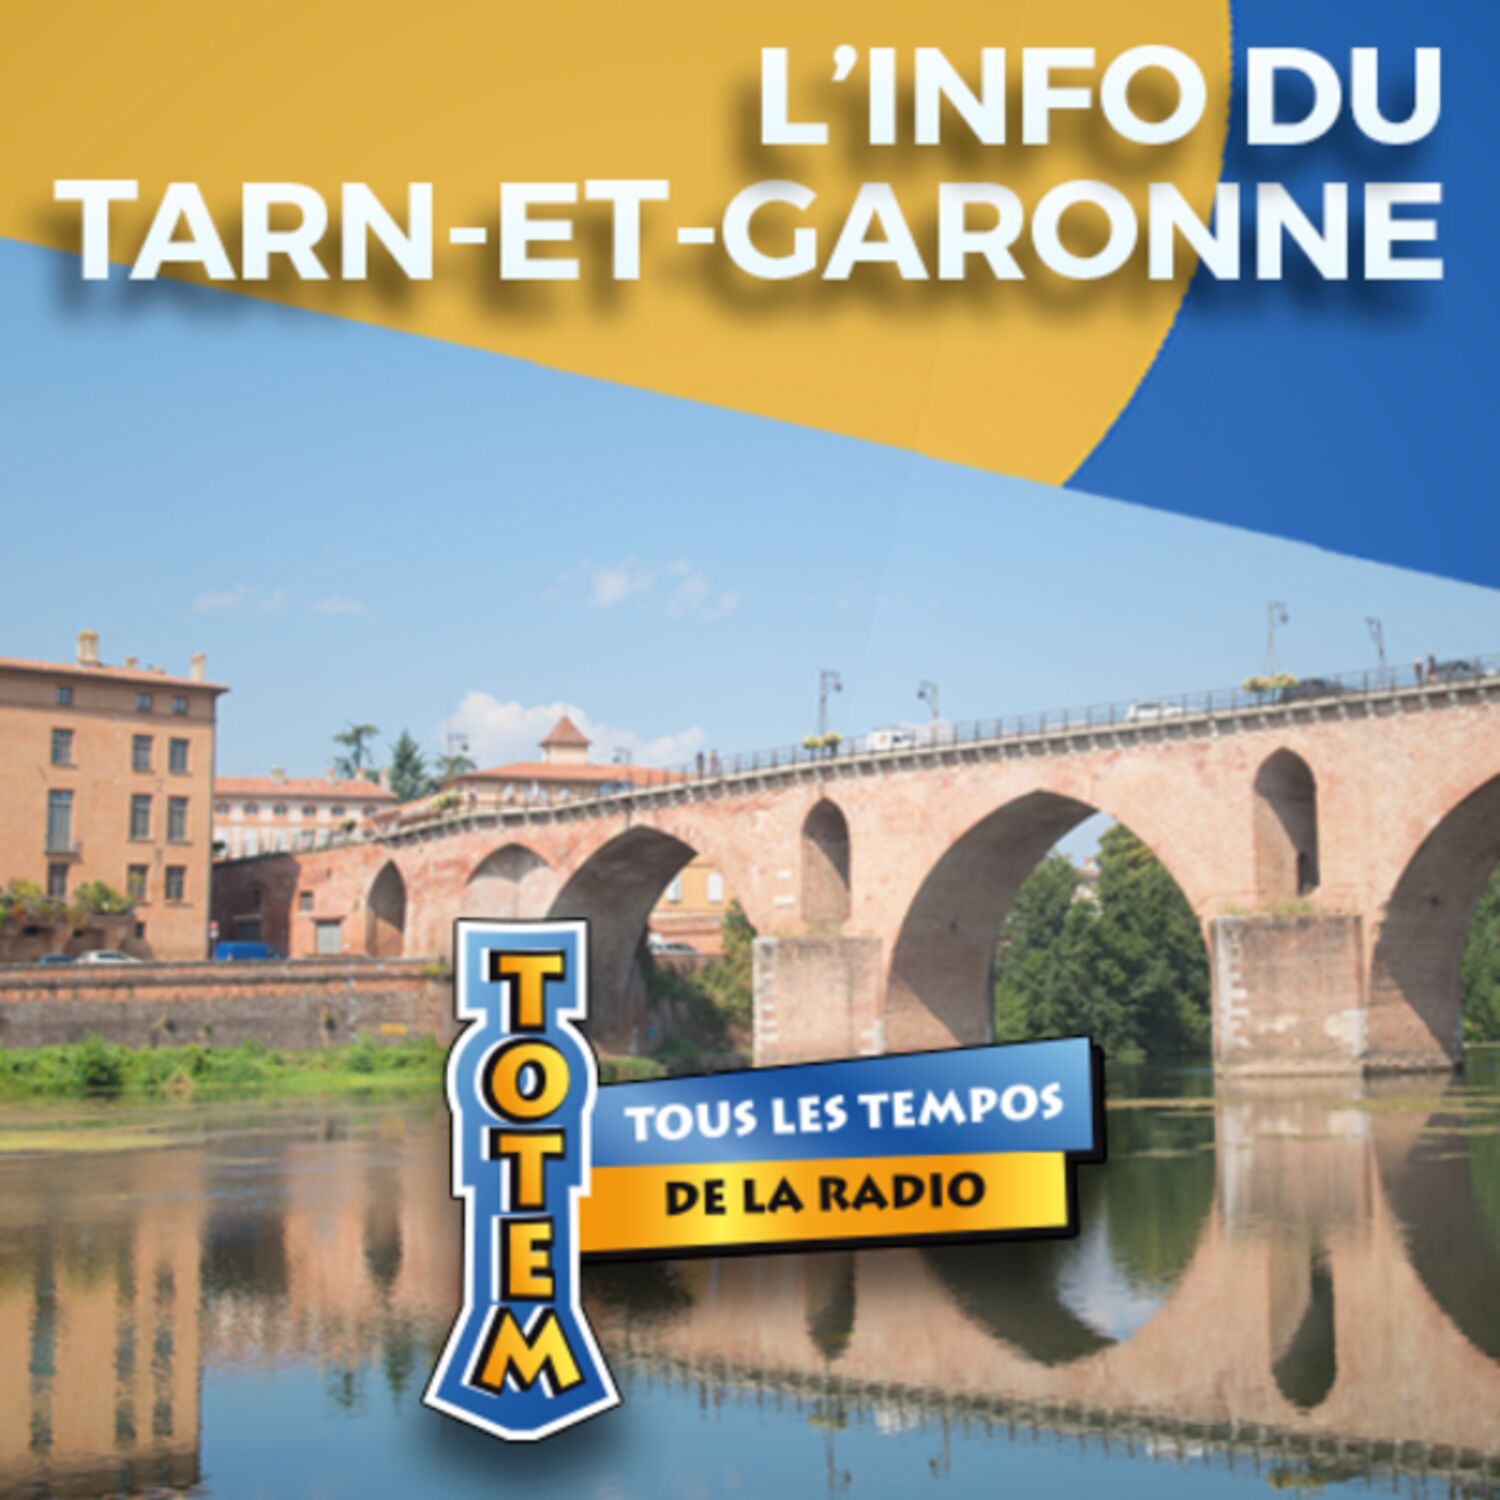 L'info du Tarn-et-Garonne du 05/04/23 à 06h30